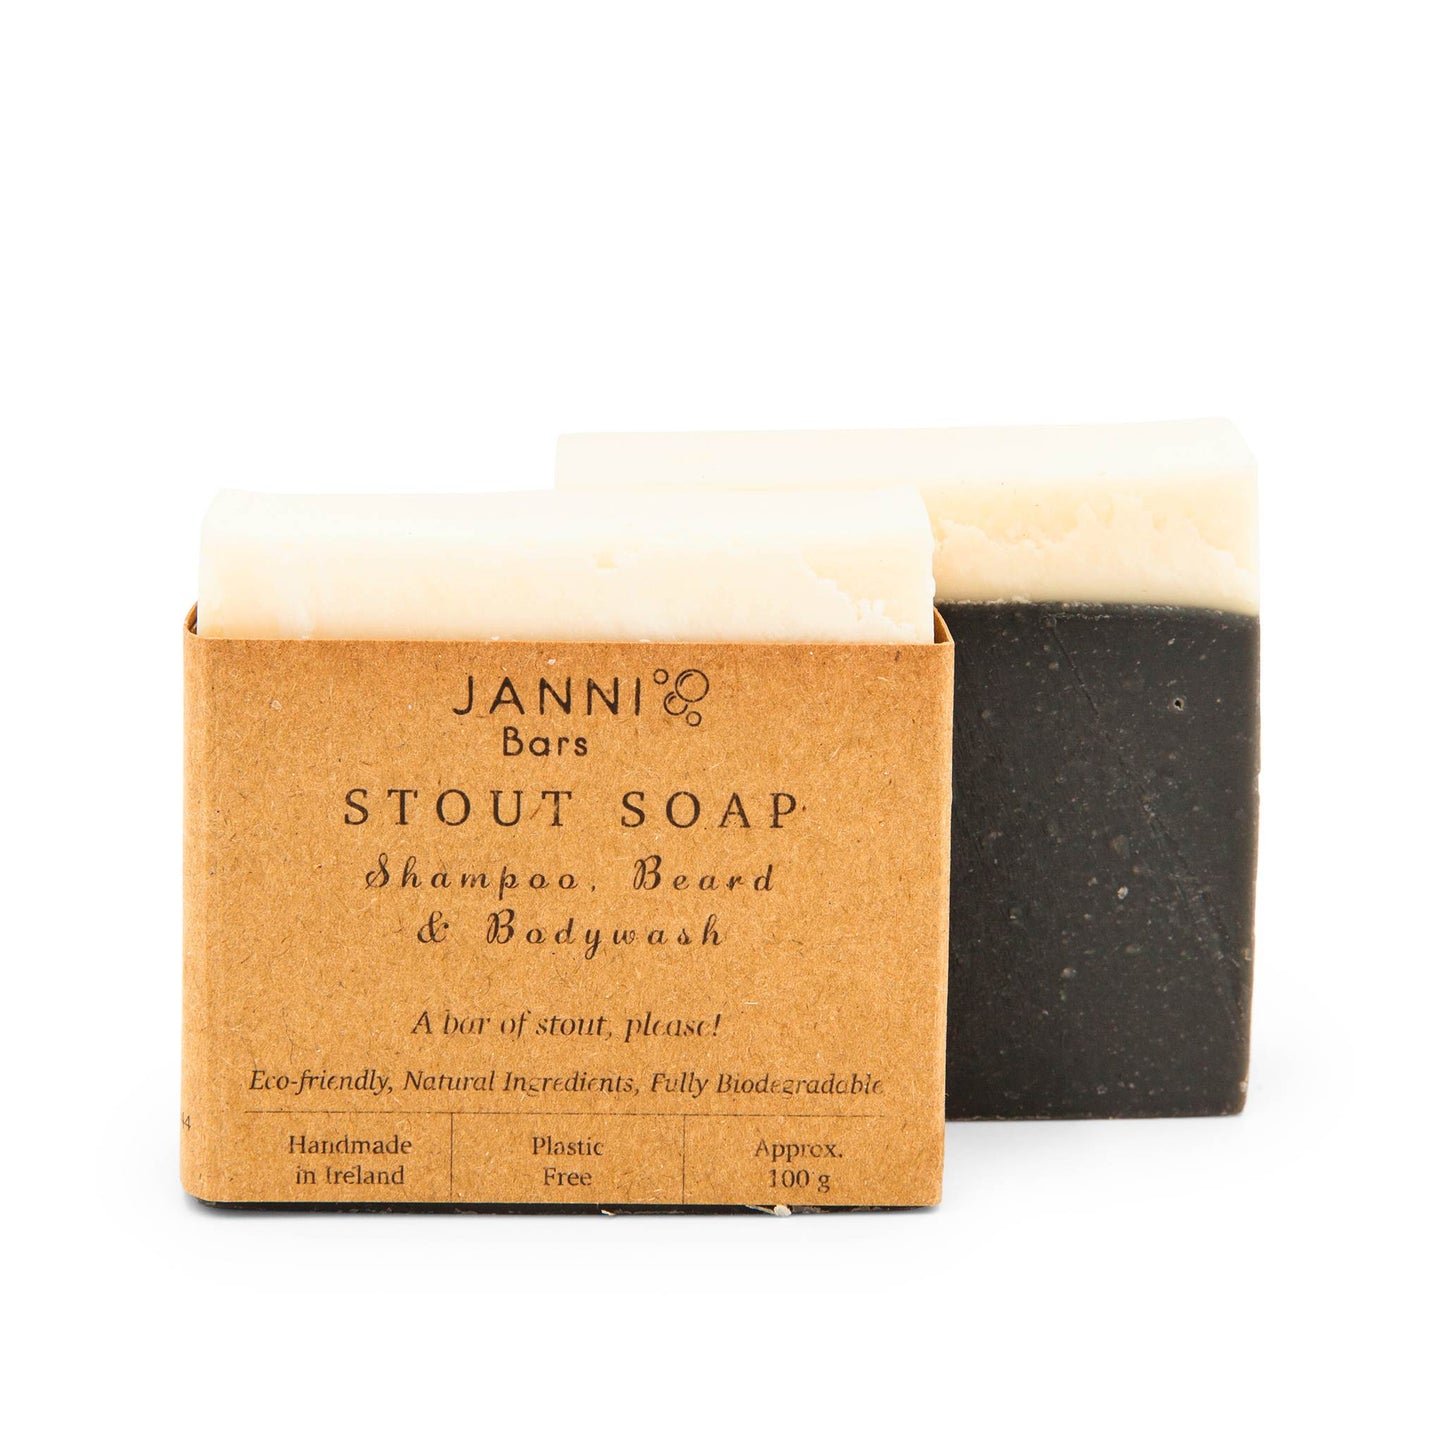 Janni Bars Soap Stout Shampoo, Beard & Body Wash Cold Pressed Soap - Janni Bars